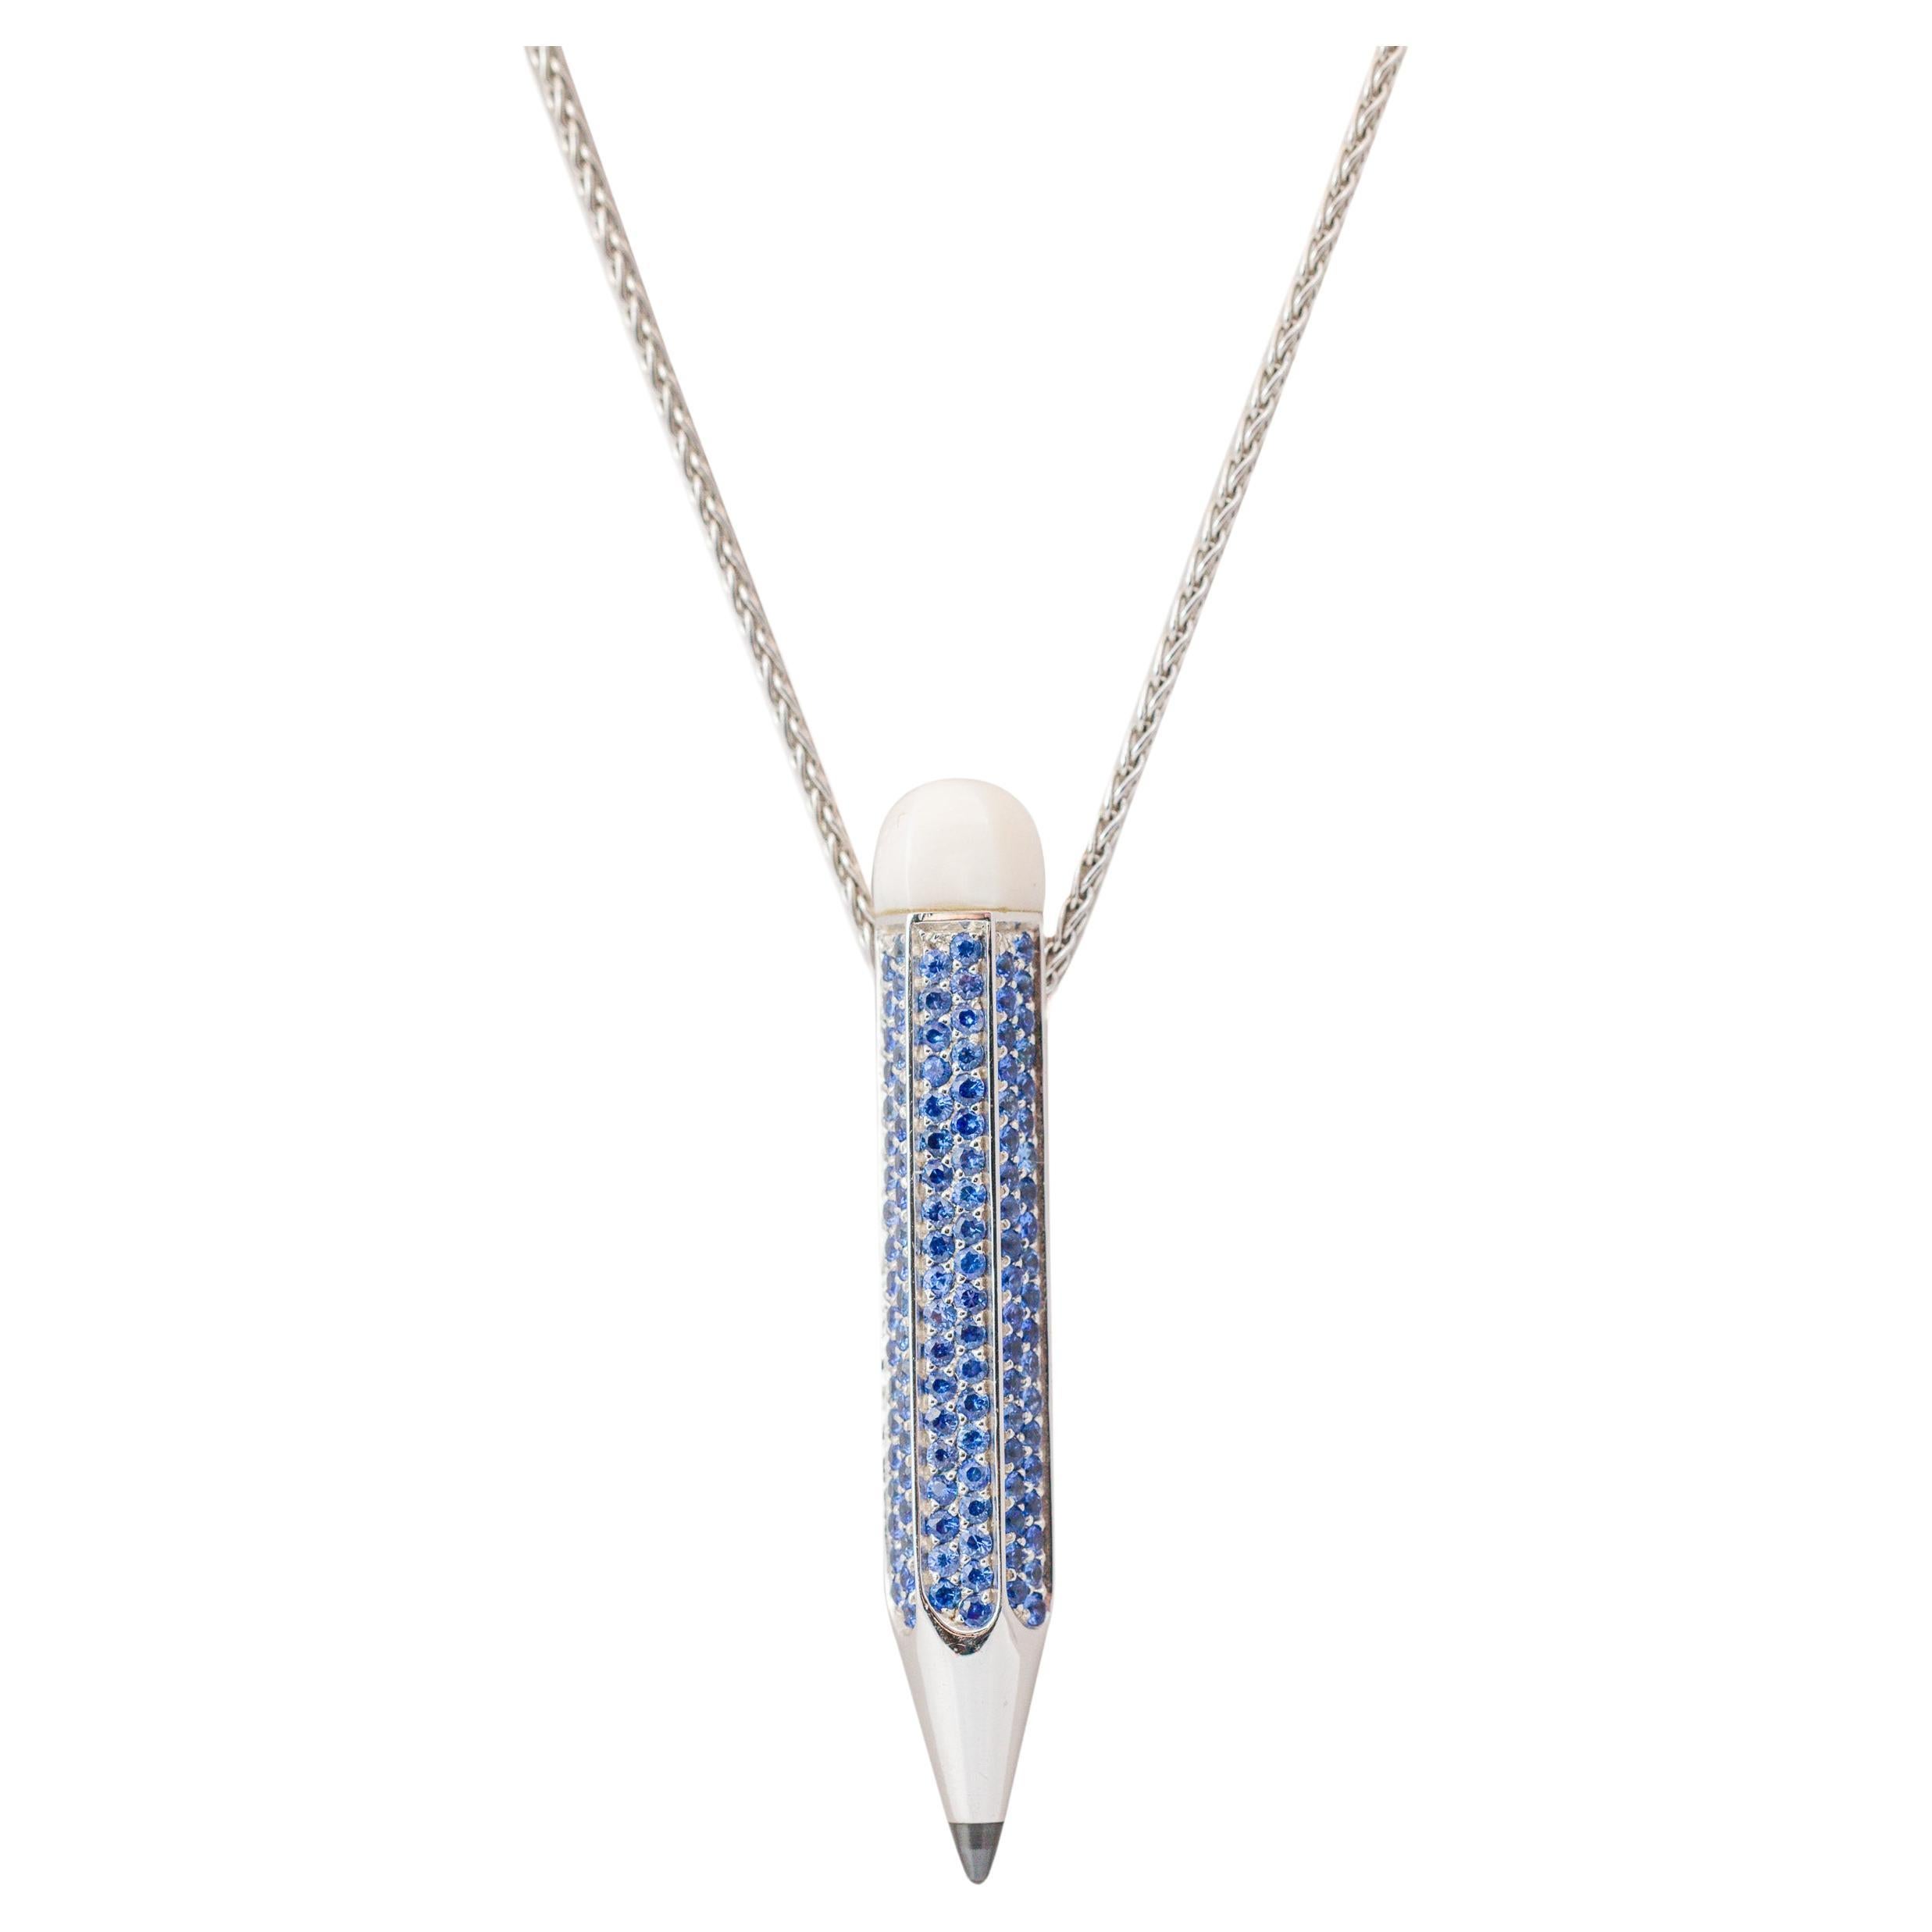 "Costis" Pencil Pendant - Pave' 2.36 cts Blue Sapphires, Diamond Point, Coral 